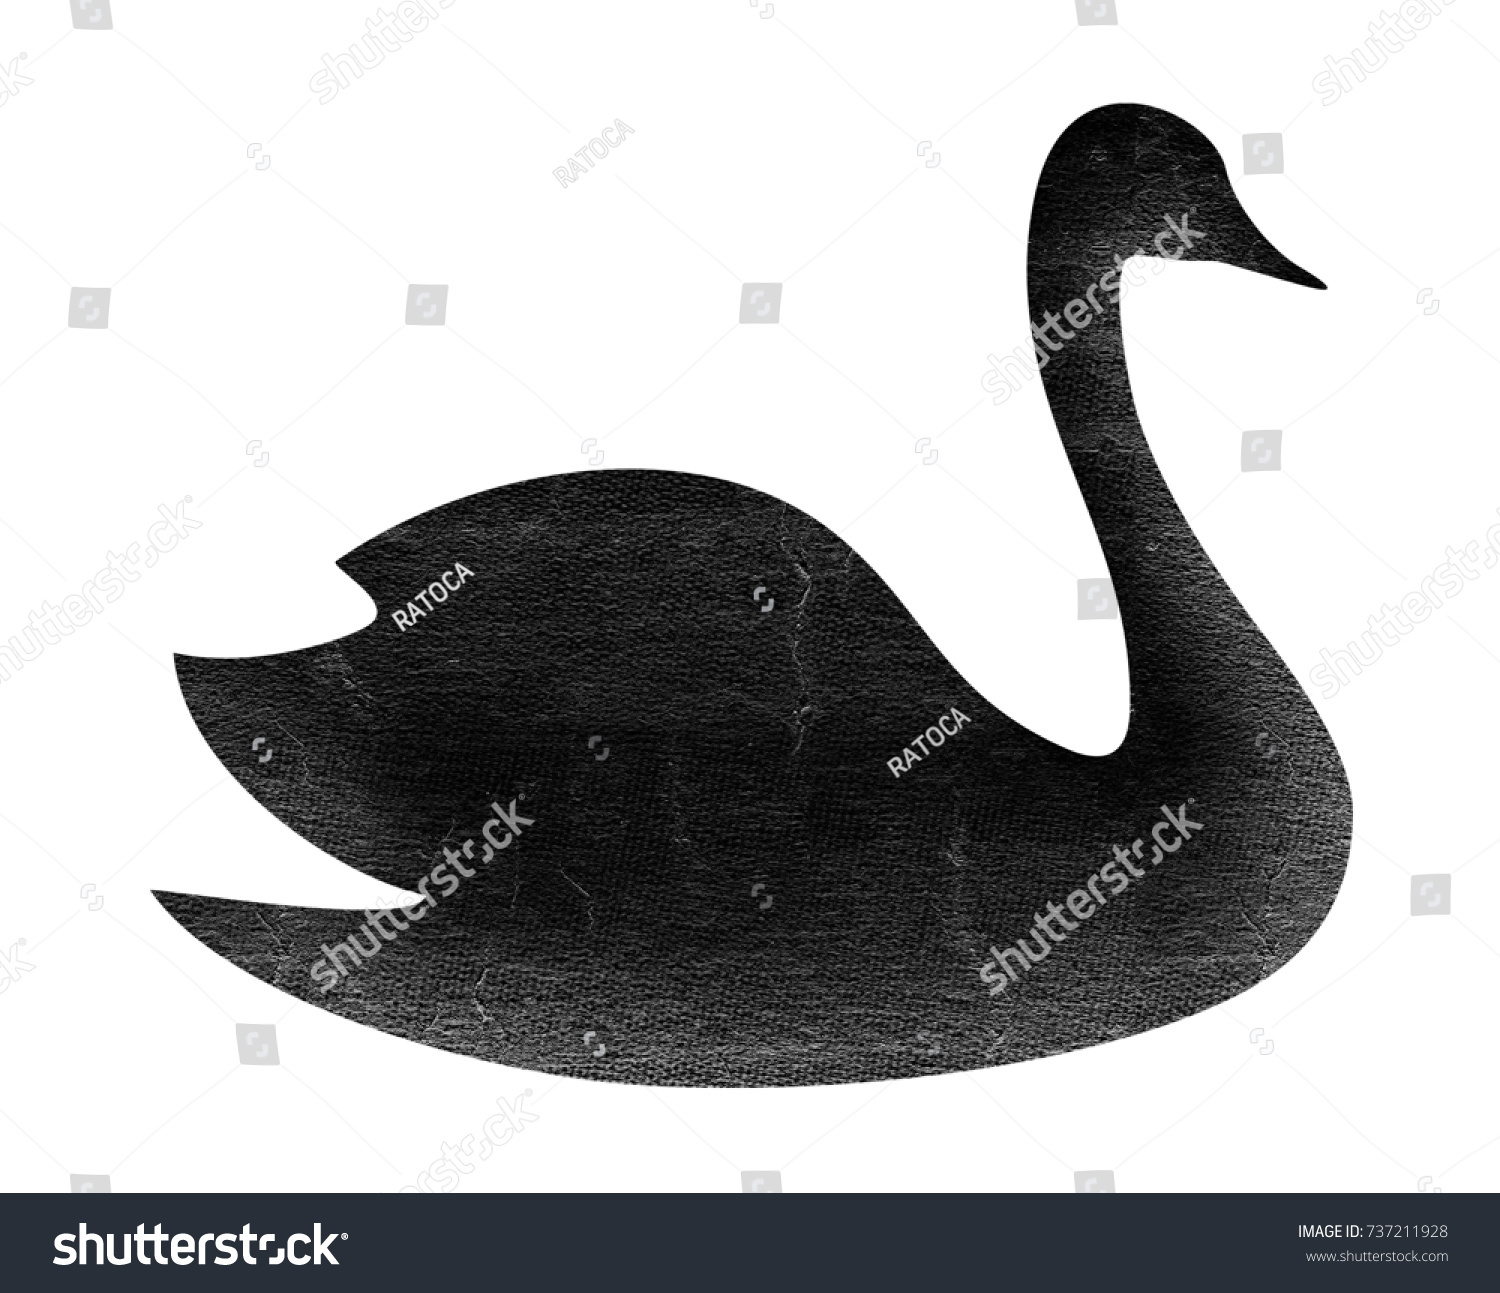 Swan Illustration Stock Illustration 737211928 - Shutterstock